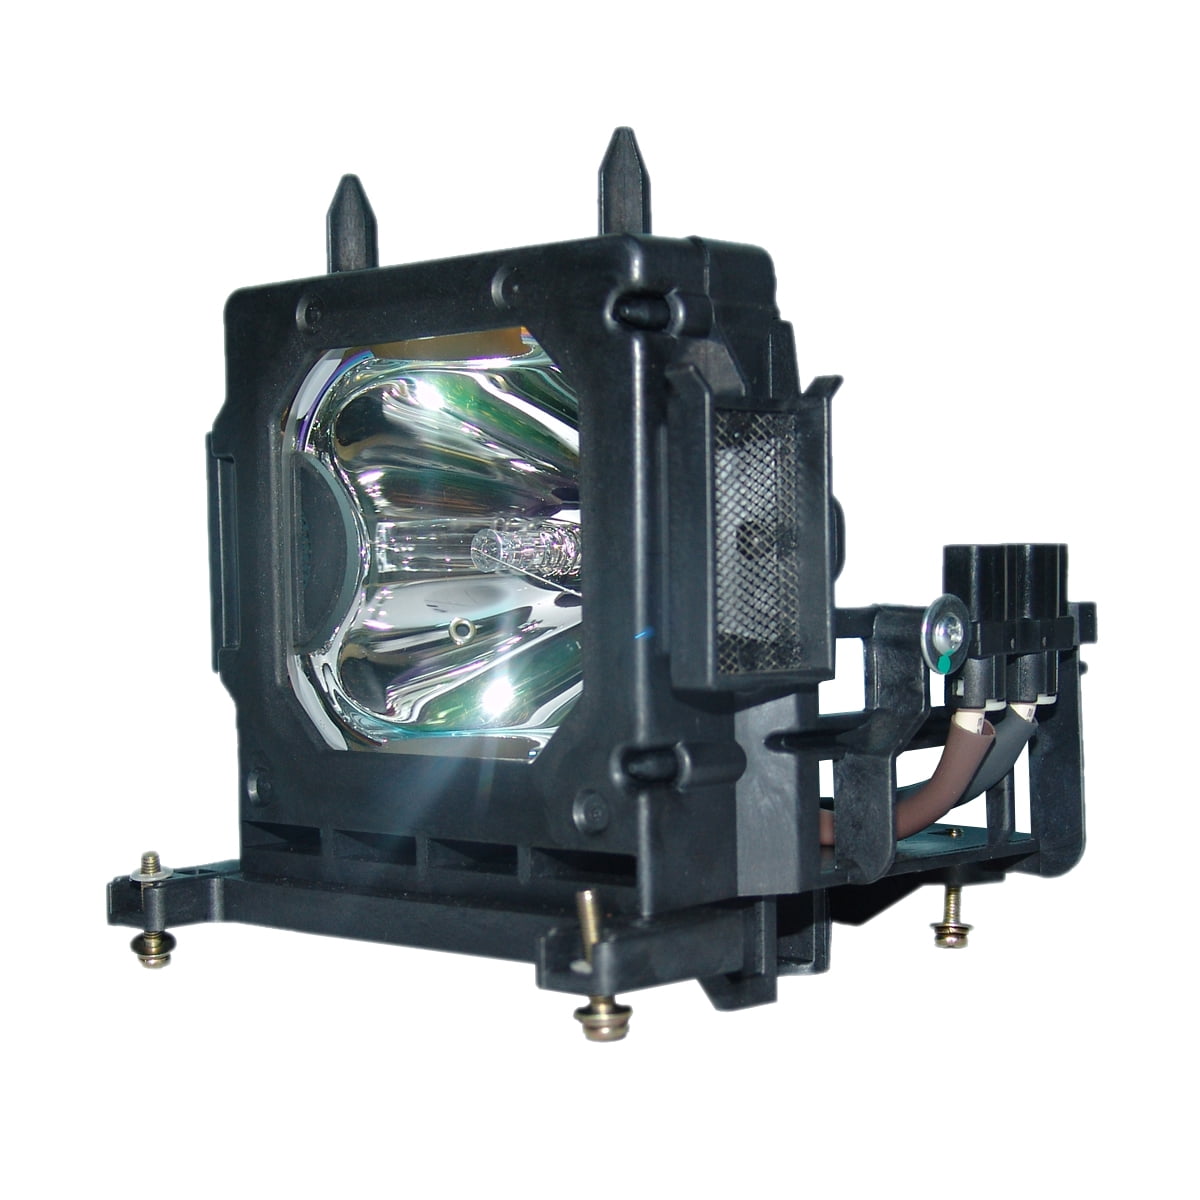 3LCD Projector Replacement Lamp Bulb Module for Sony LMP-E211 VPL-EX100 VPL-EX200